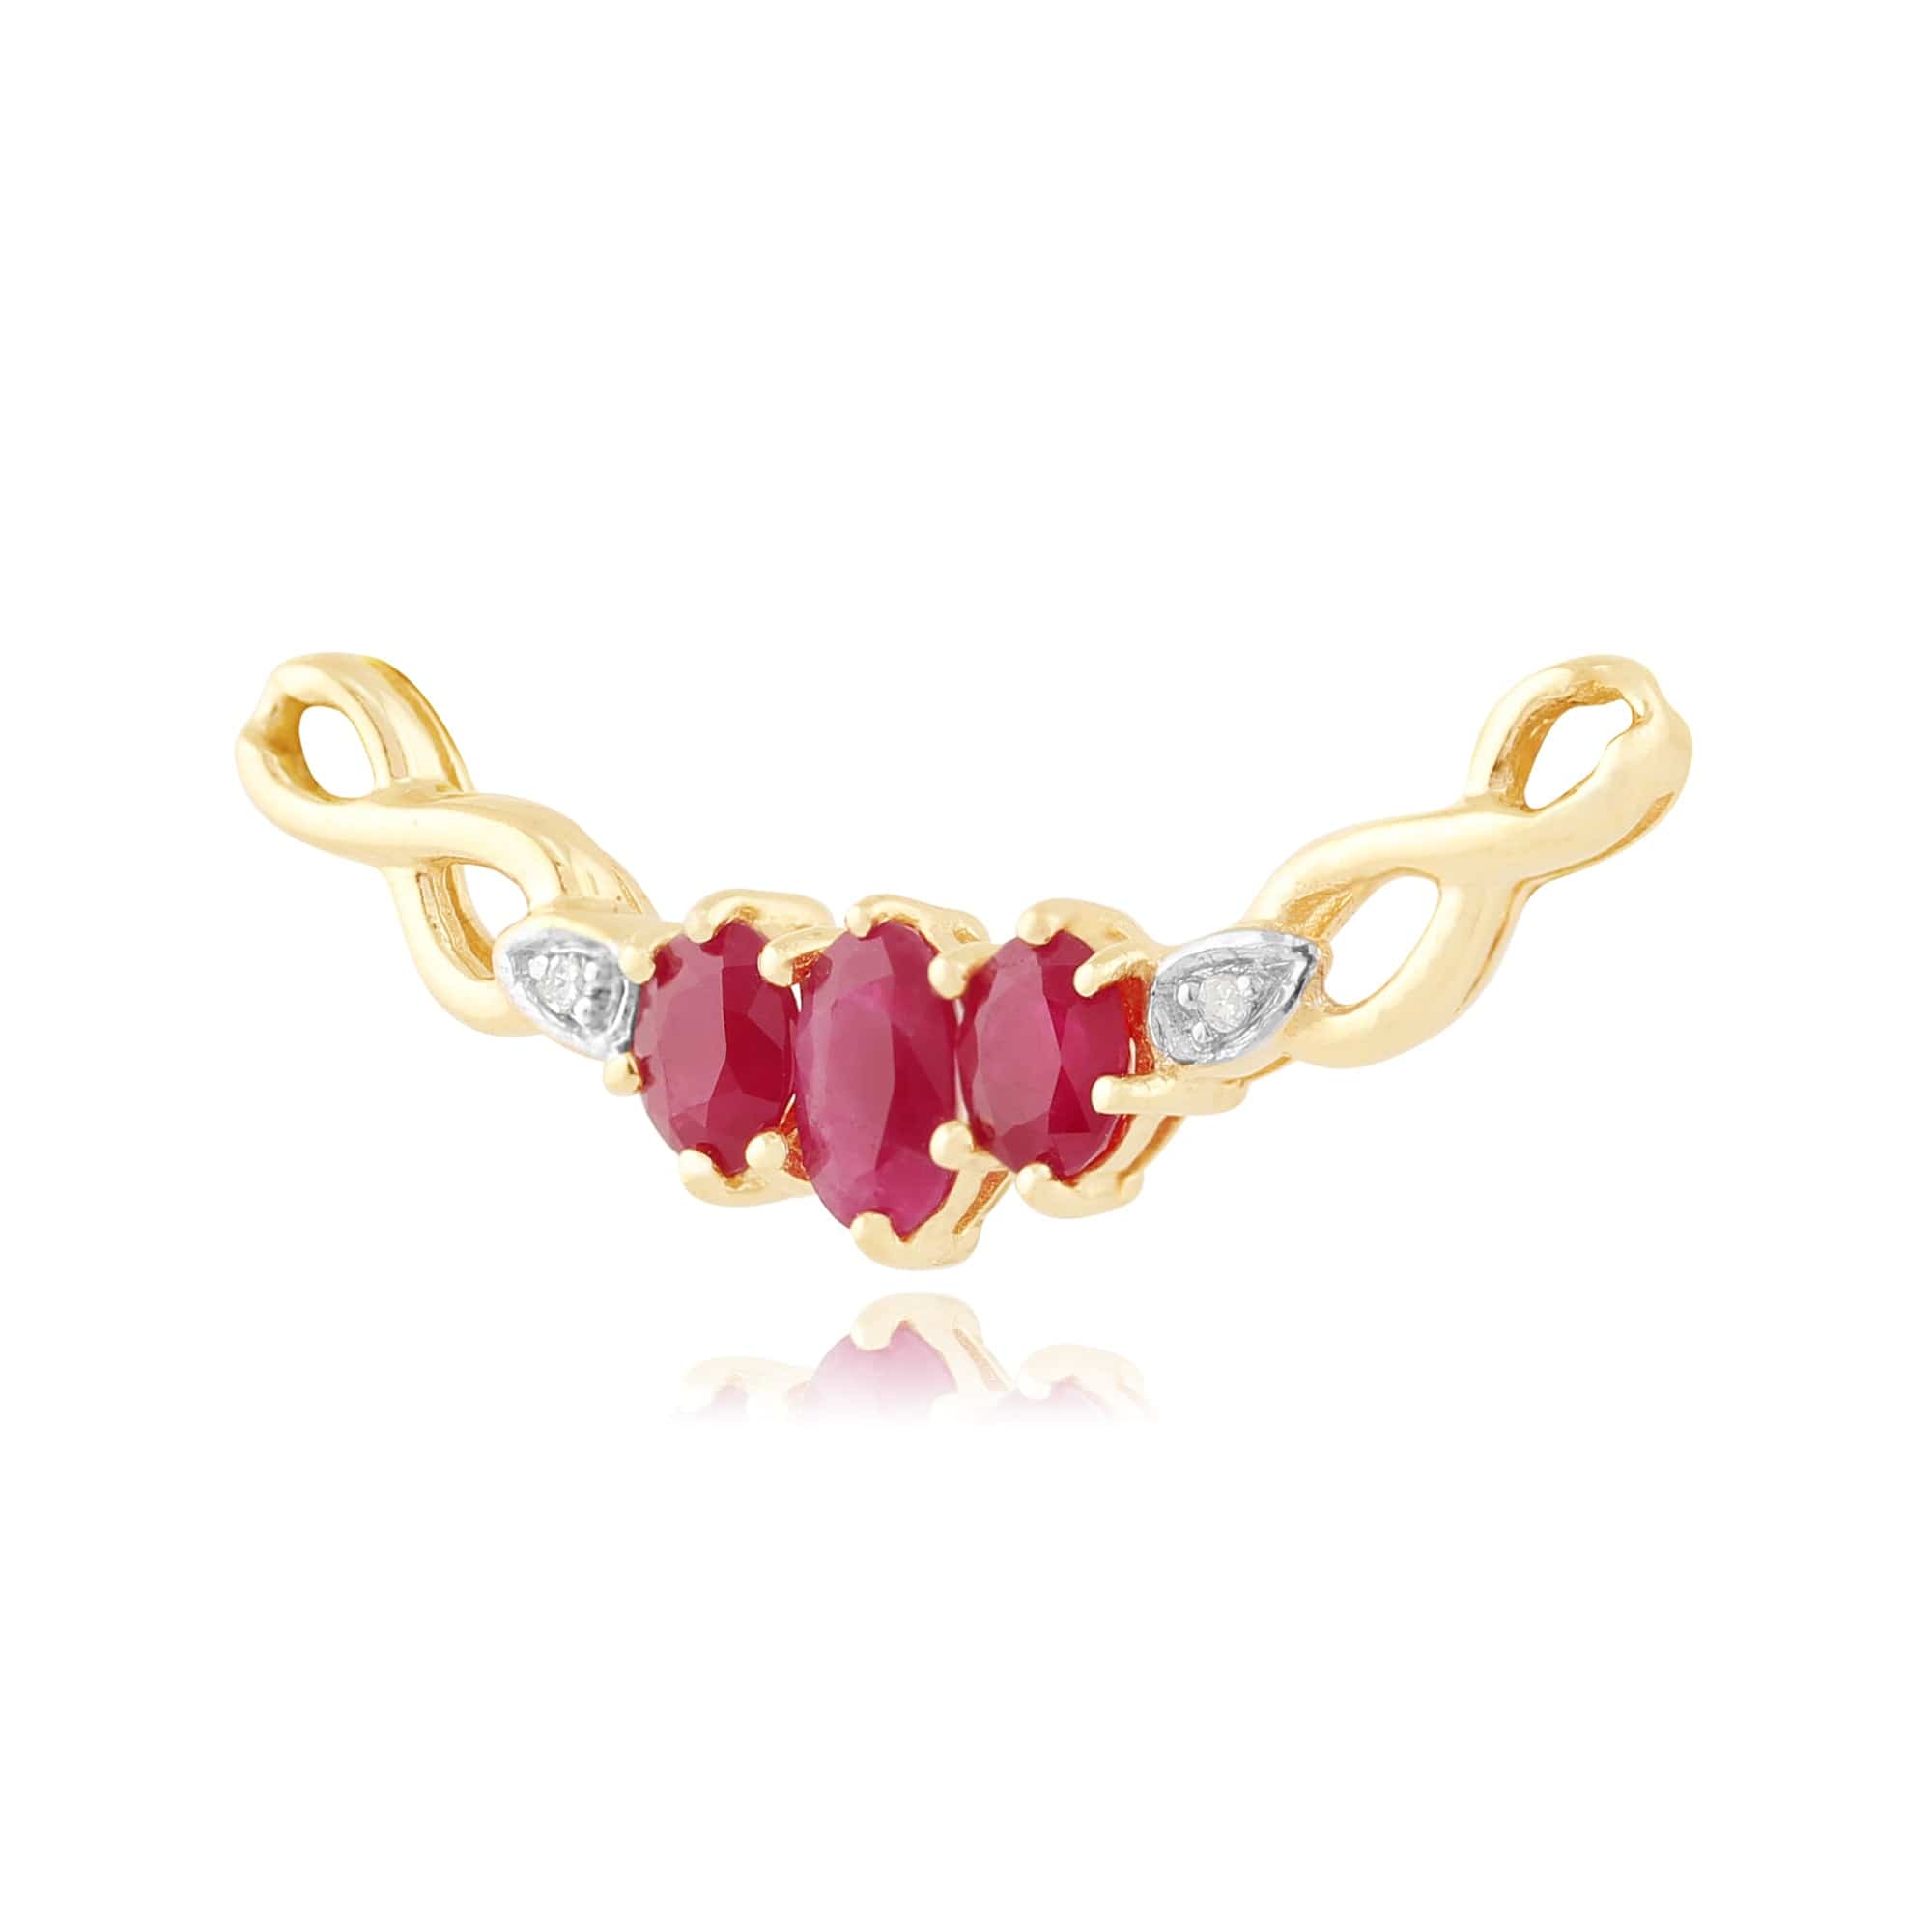 Infinity Ruby & Diamond Necklace in 9ct Yellow Gold - Gemondo